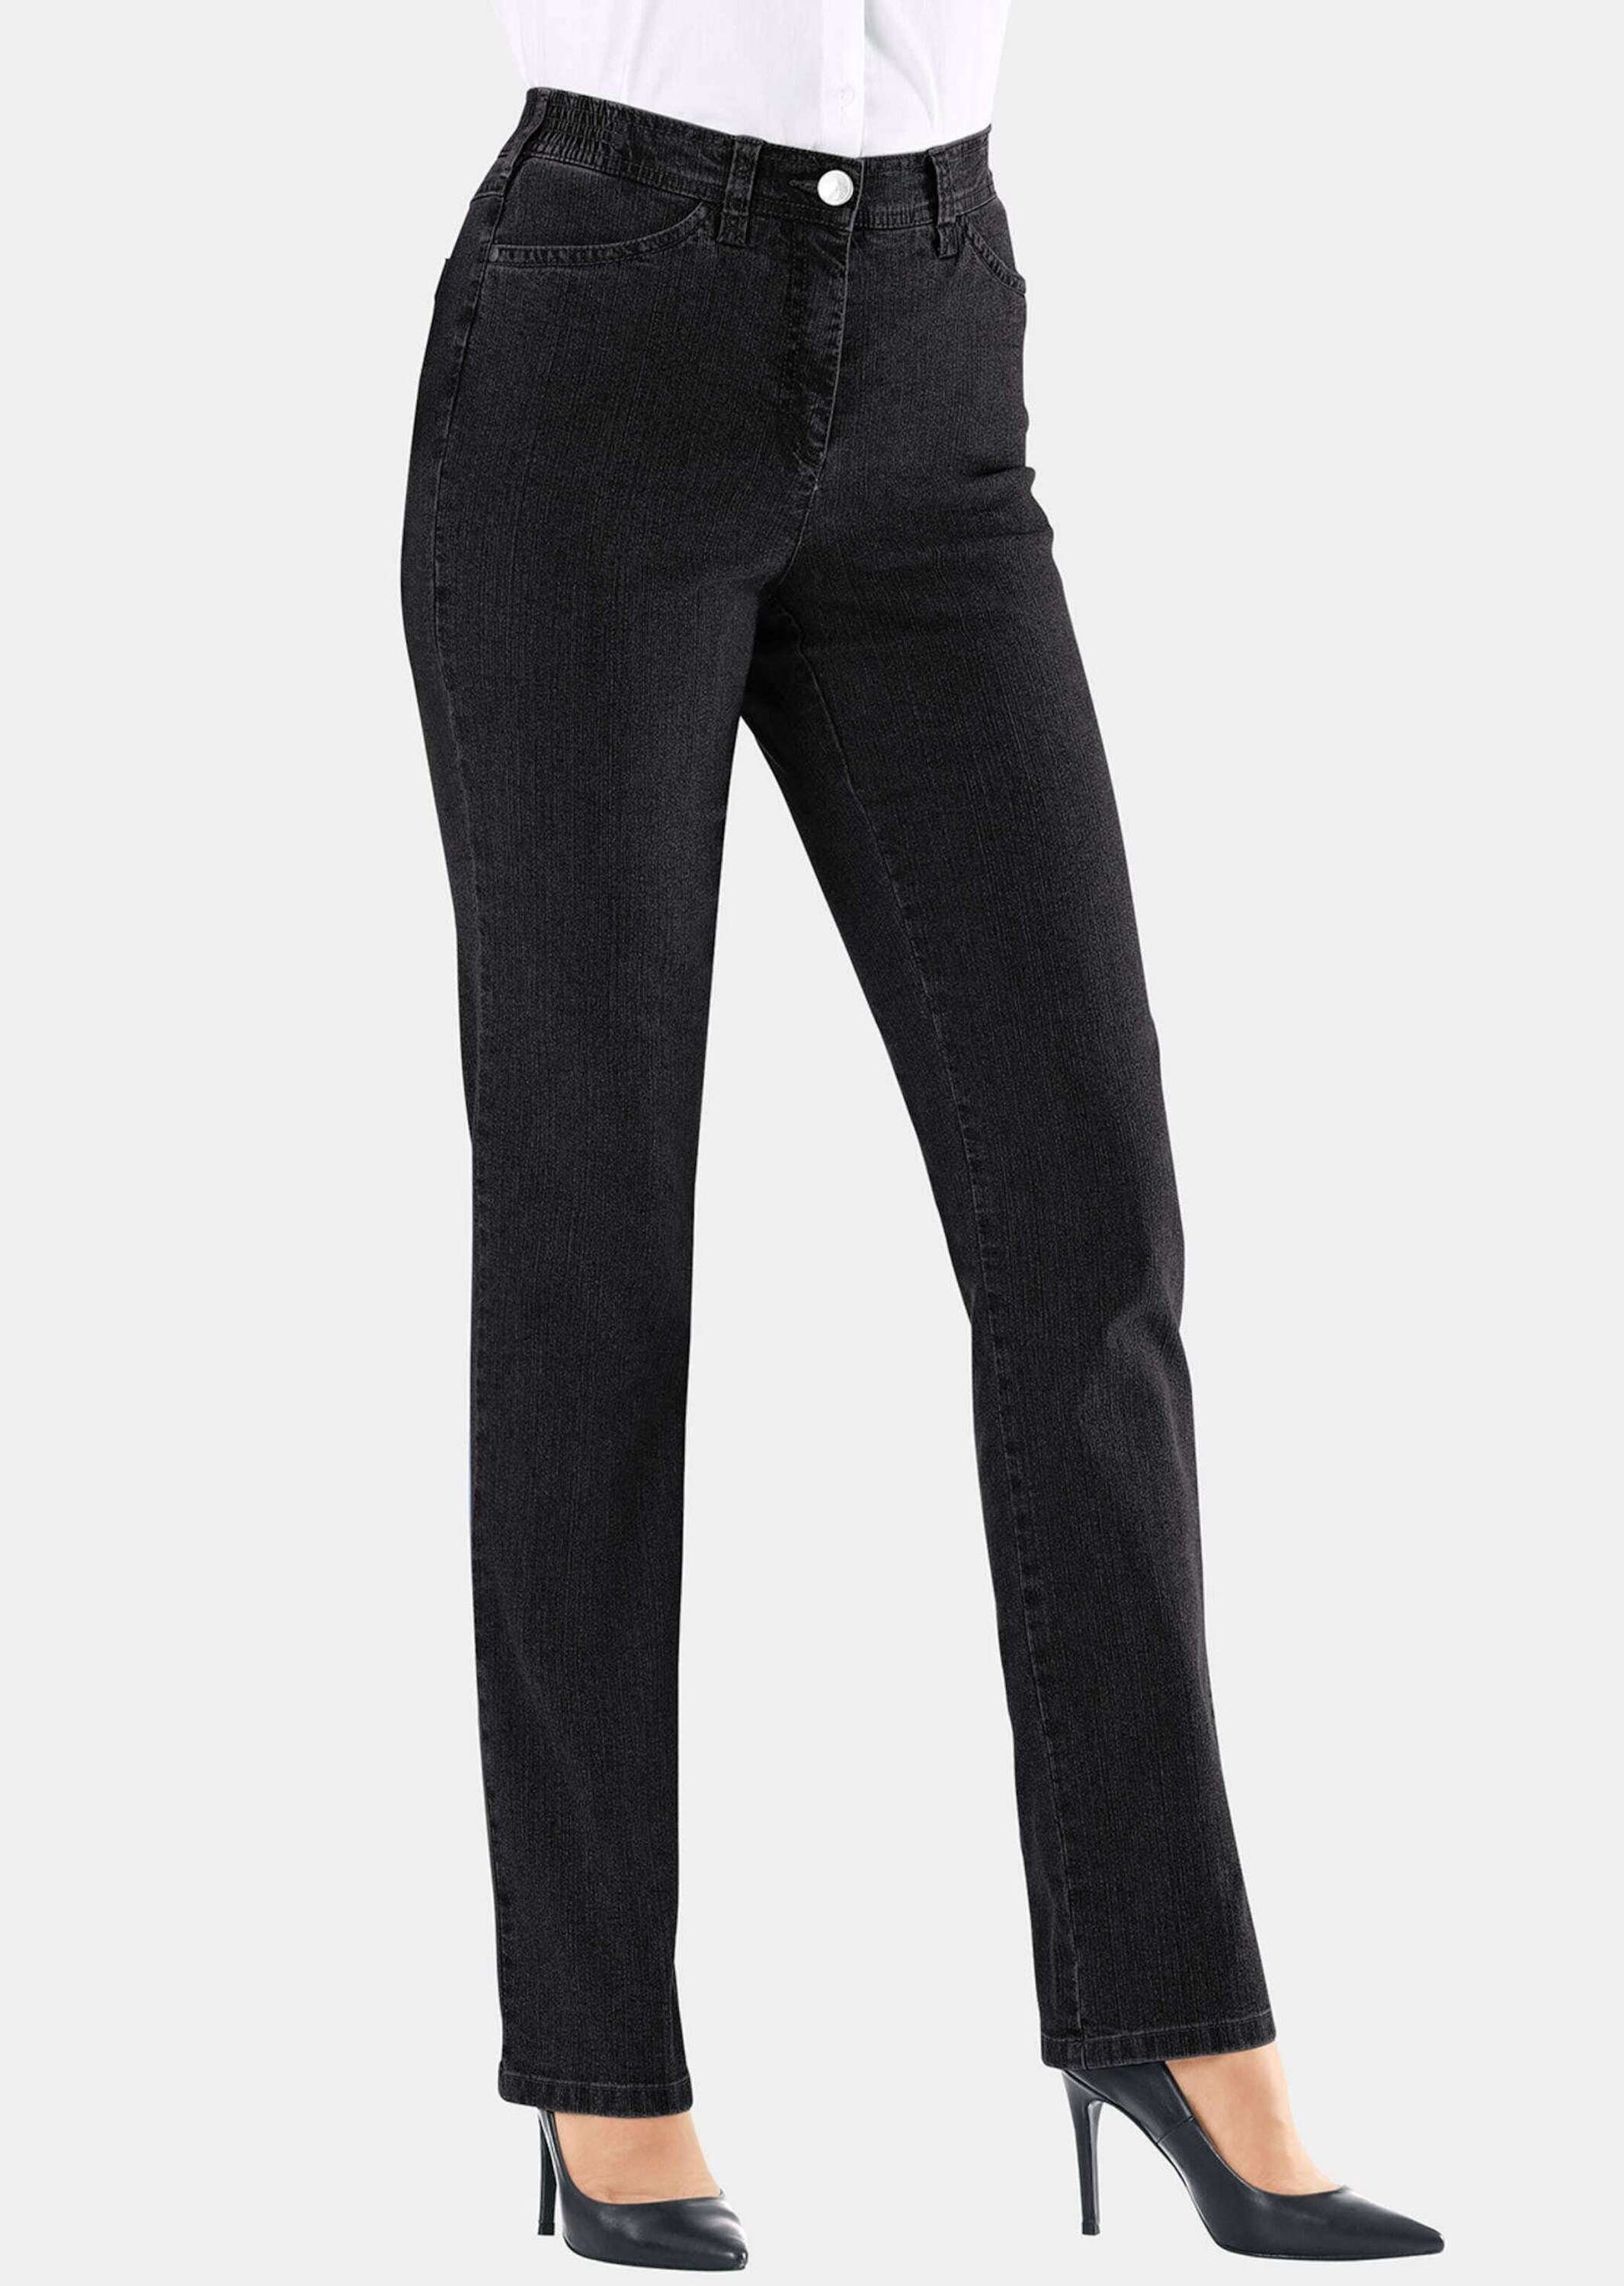 GOLDNER Bequeme Jeans Kurzgröße: Klassische Jeanshose ANNA schwarz | Stretchjeans